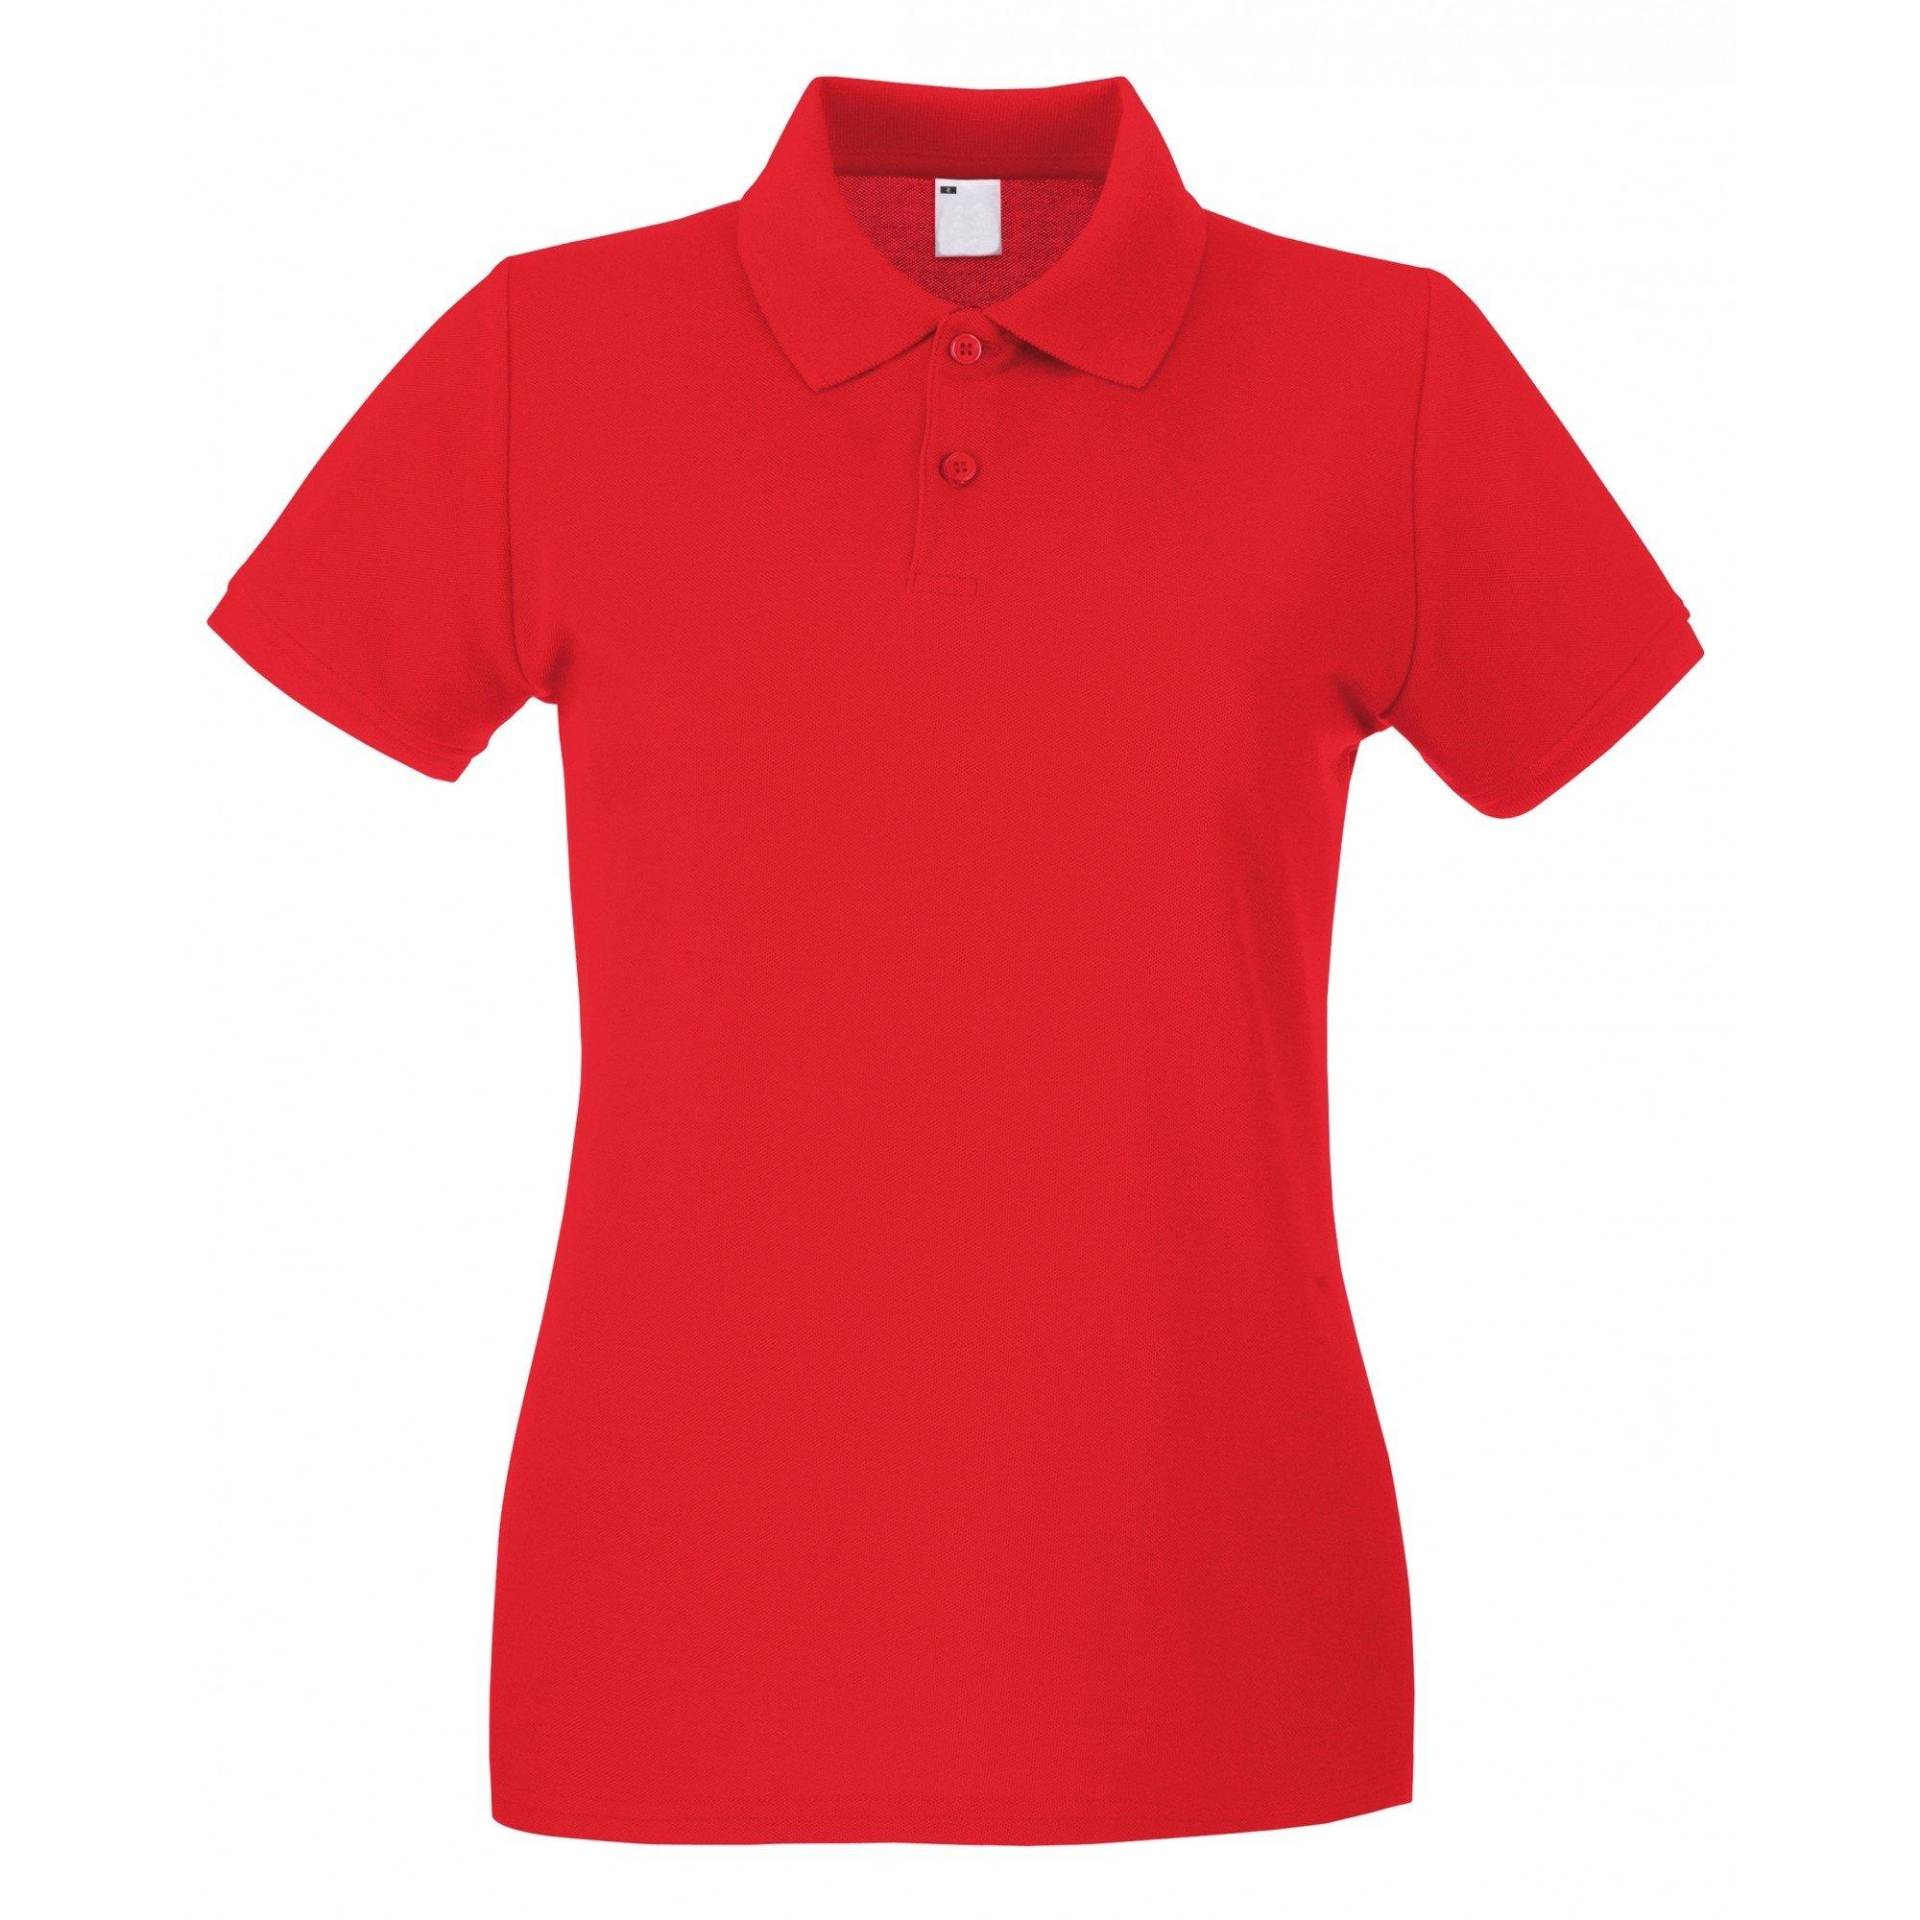 Poloshirt, Figurbetont, Kurzärmlig Damen Rot Bunt M von Universal Textiles